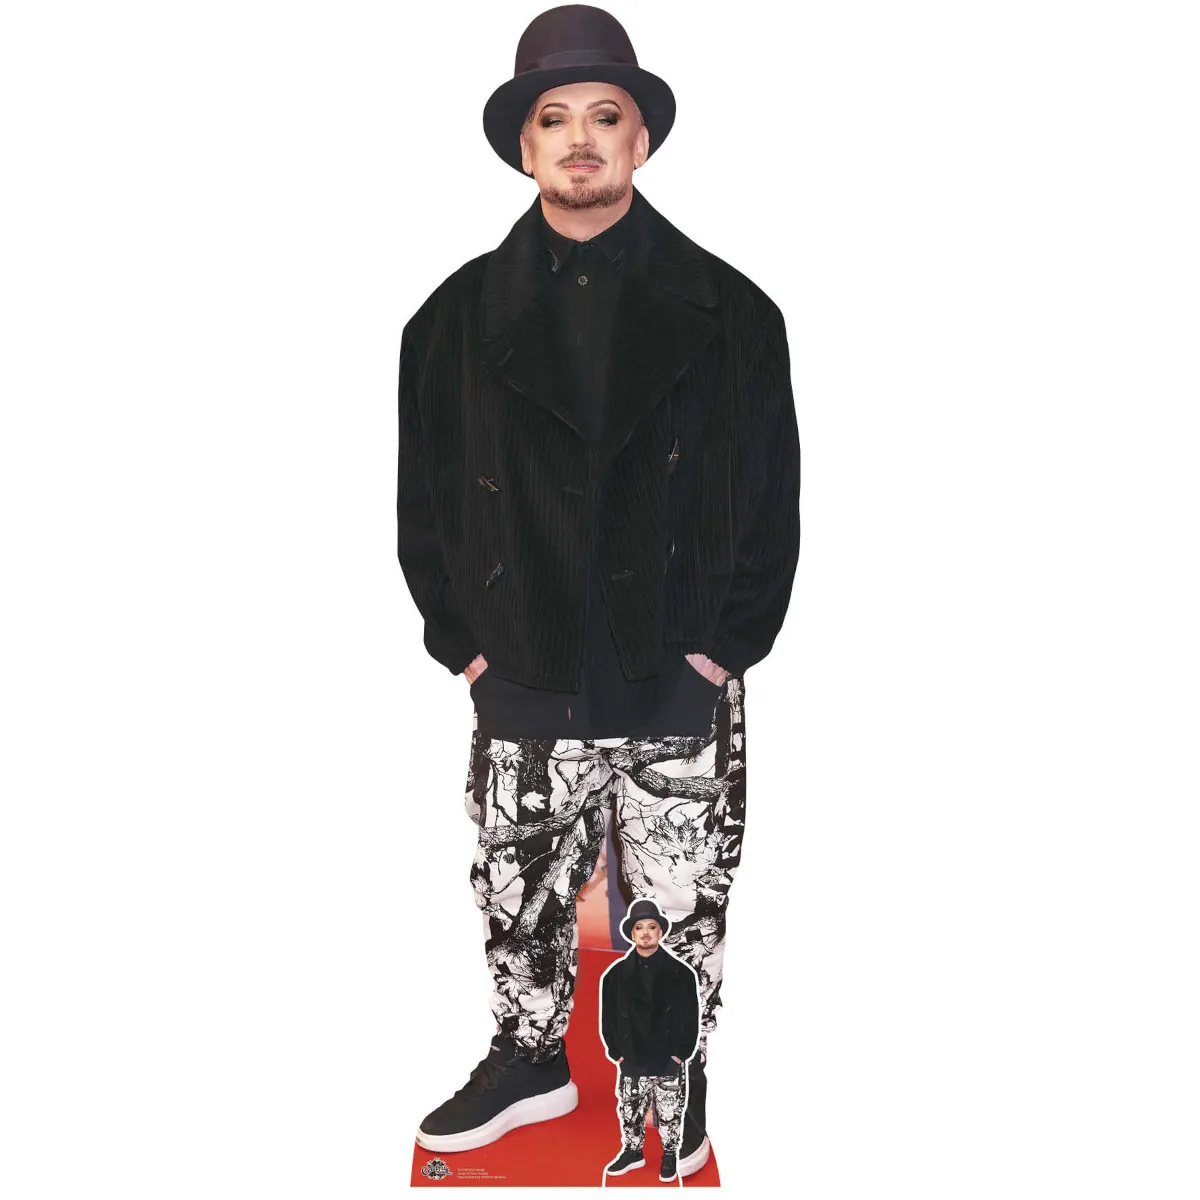 CS1042 Boy George 'Black Jacket' (English Singer) Lifesize + Mini Cardboard Cutout Standee Front